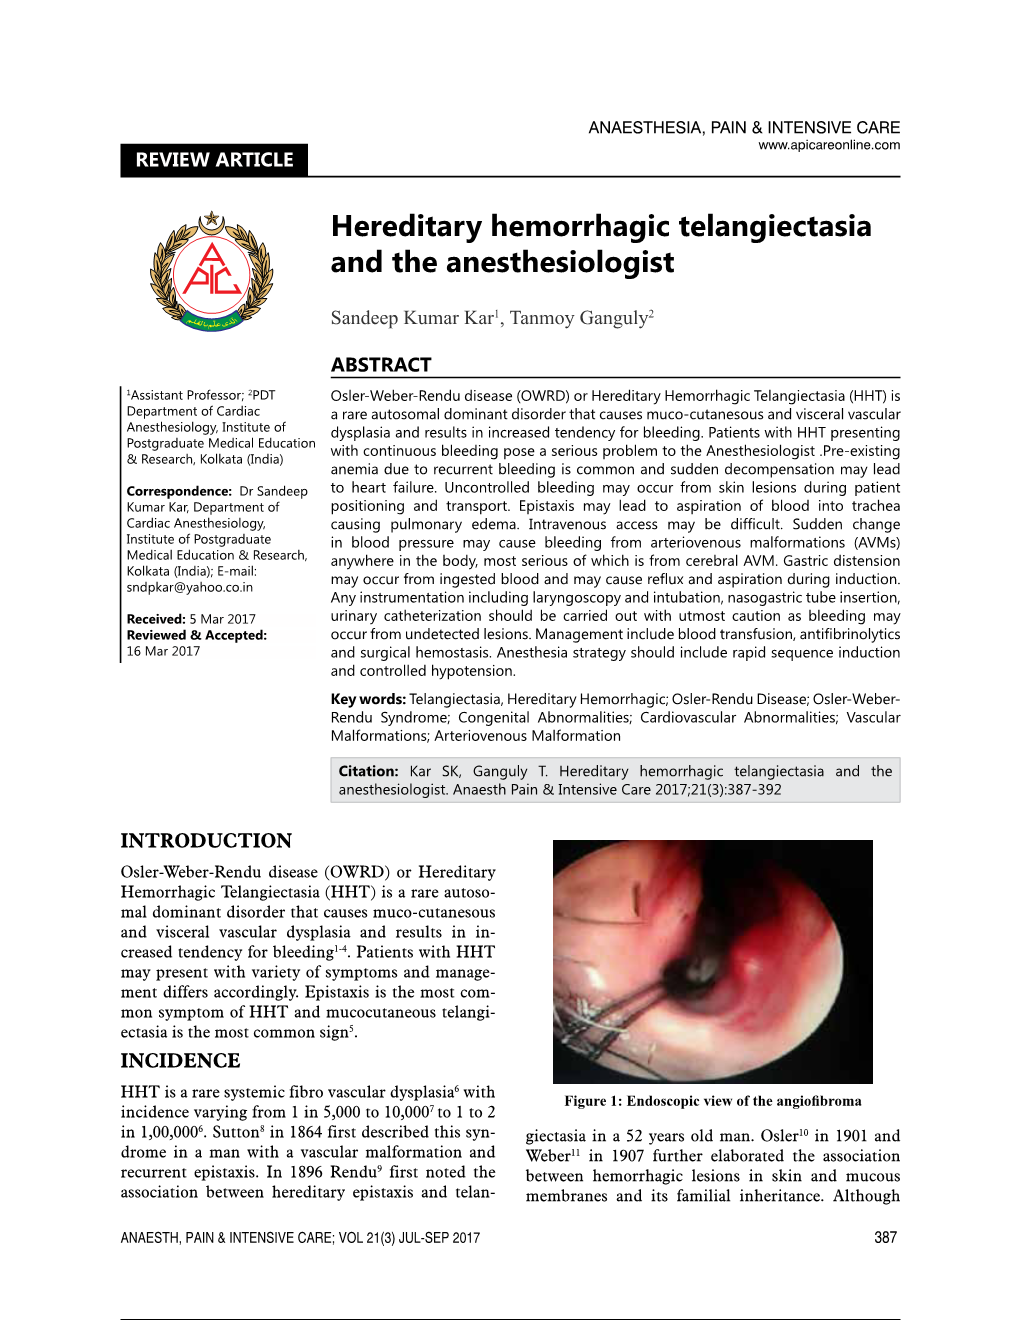 Hereditary Hemorrhagic Telangiectasia and the Anesthesiologist